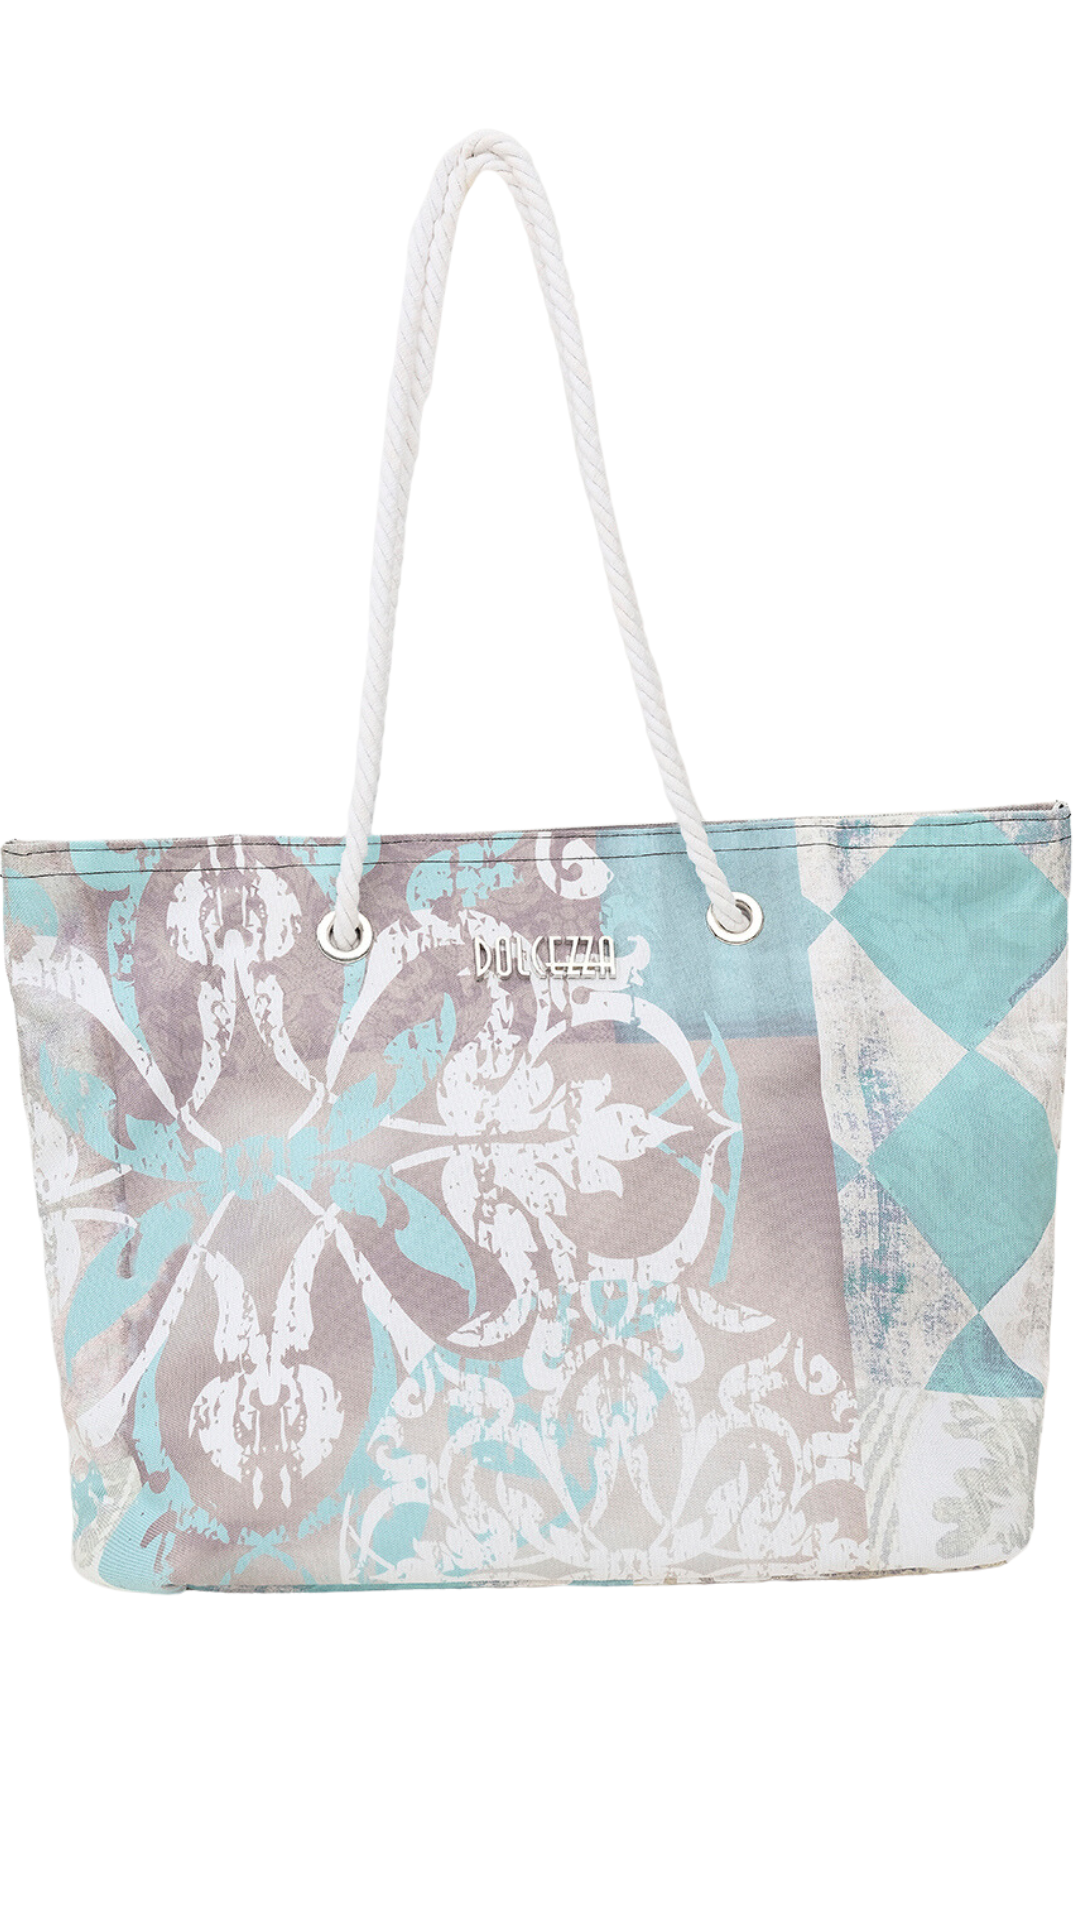 "Memories & Whispers Aqua" Artist Print Tote Bag. Style DOLC2352